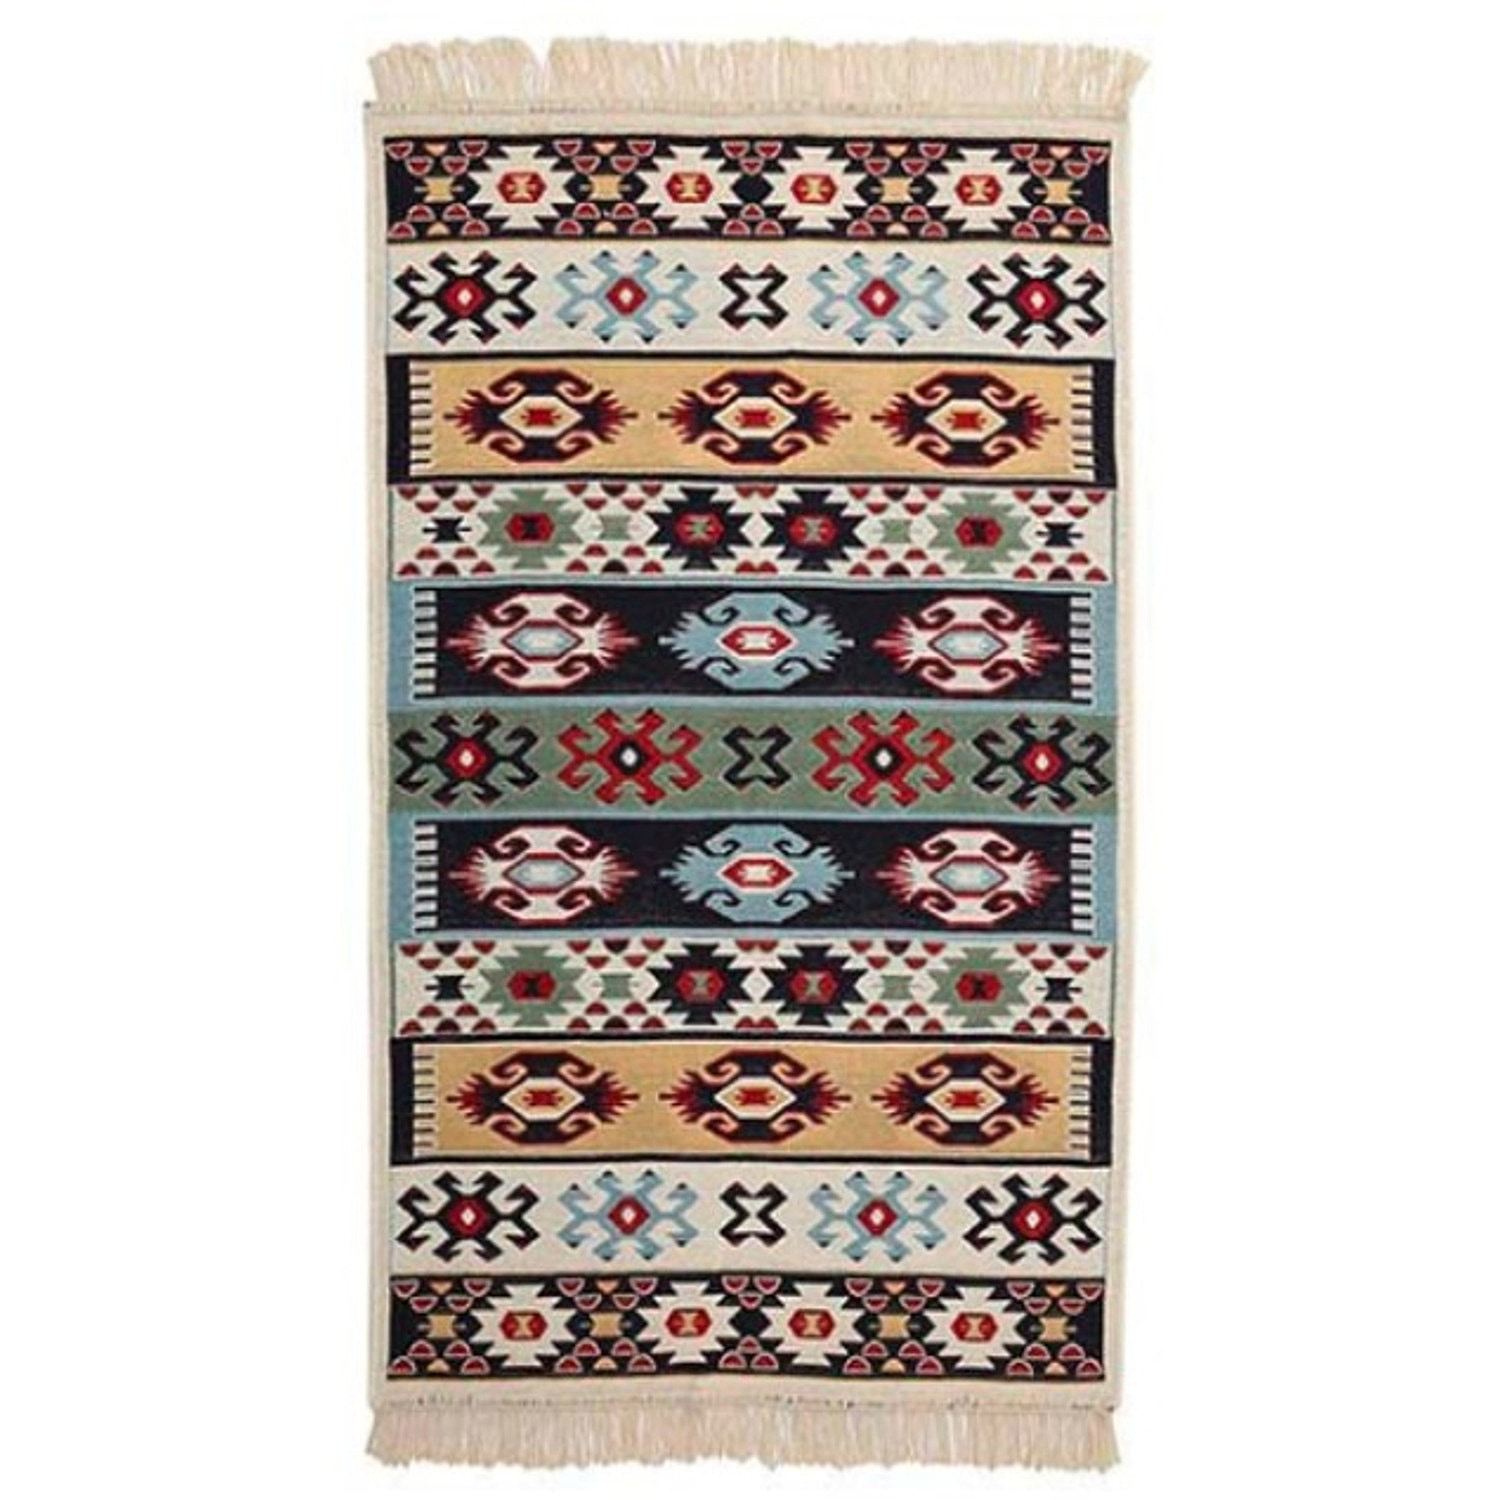 Turkish  Authentic Traditional Machine Made Kilim Rugs (Size 120x80 cm) - Multi